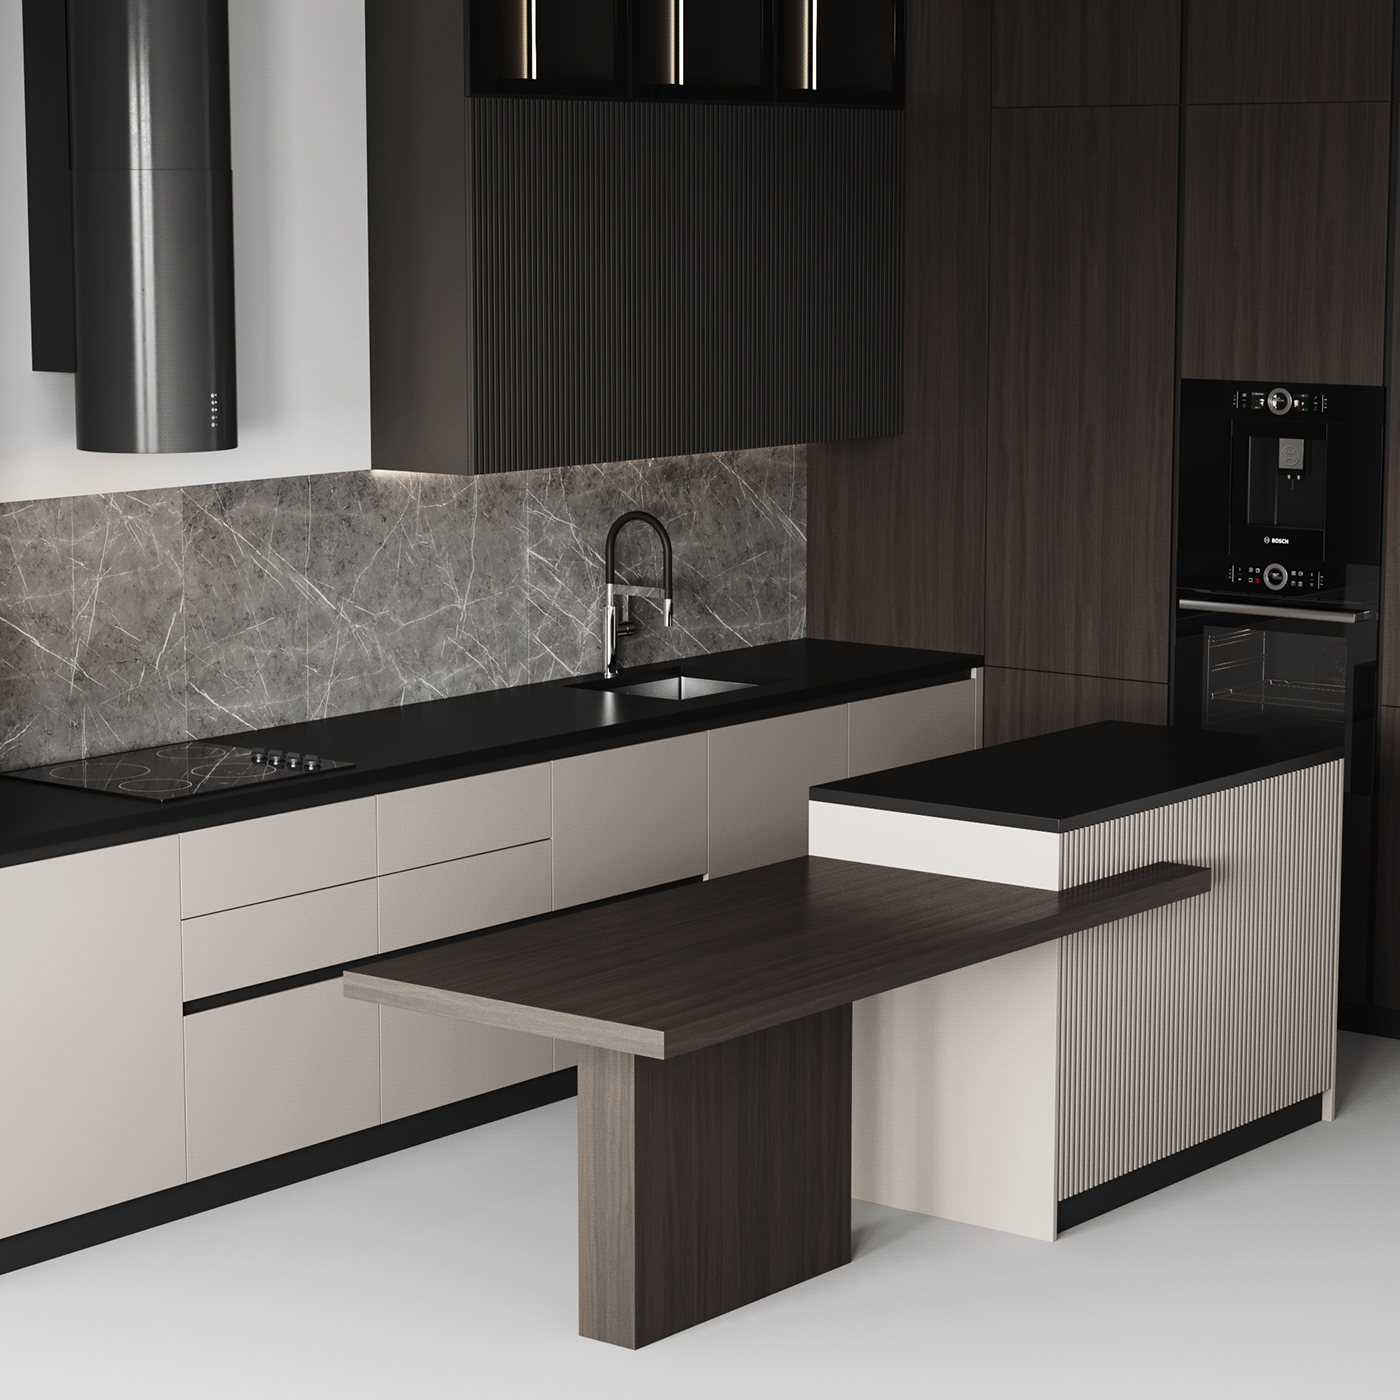 3dmodeling corona kitchen kitchen design Render archviz Interior modern kitchen visualization